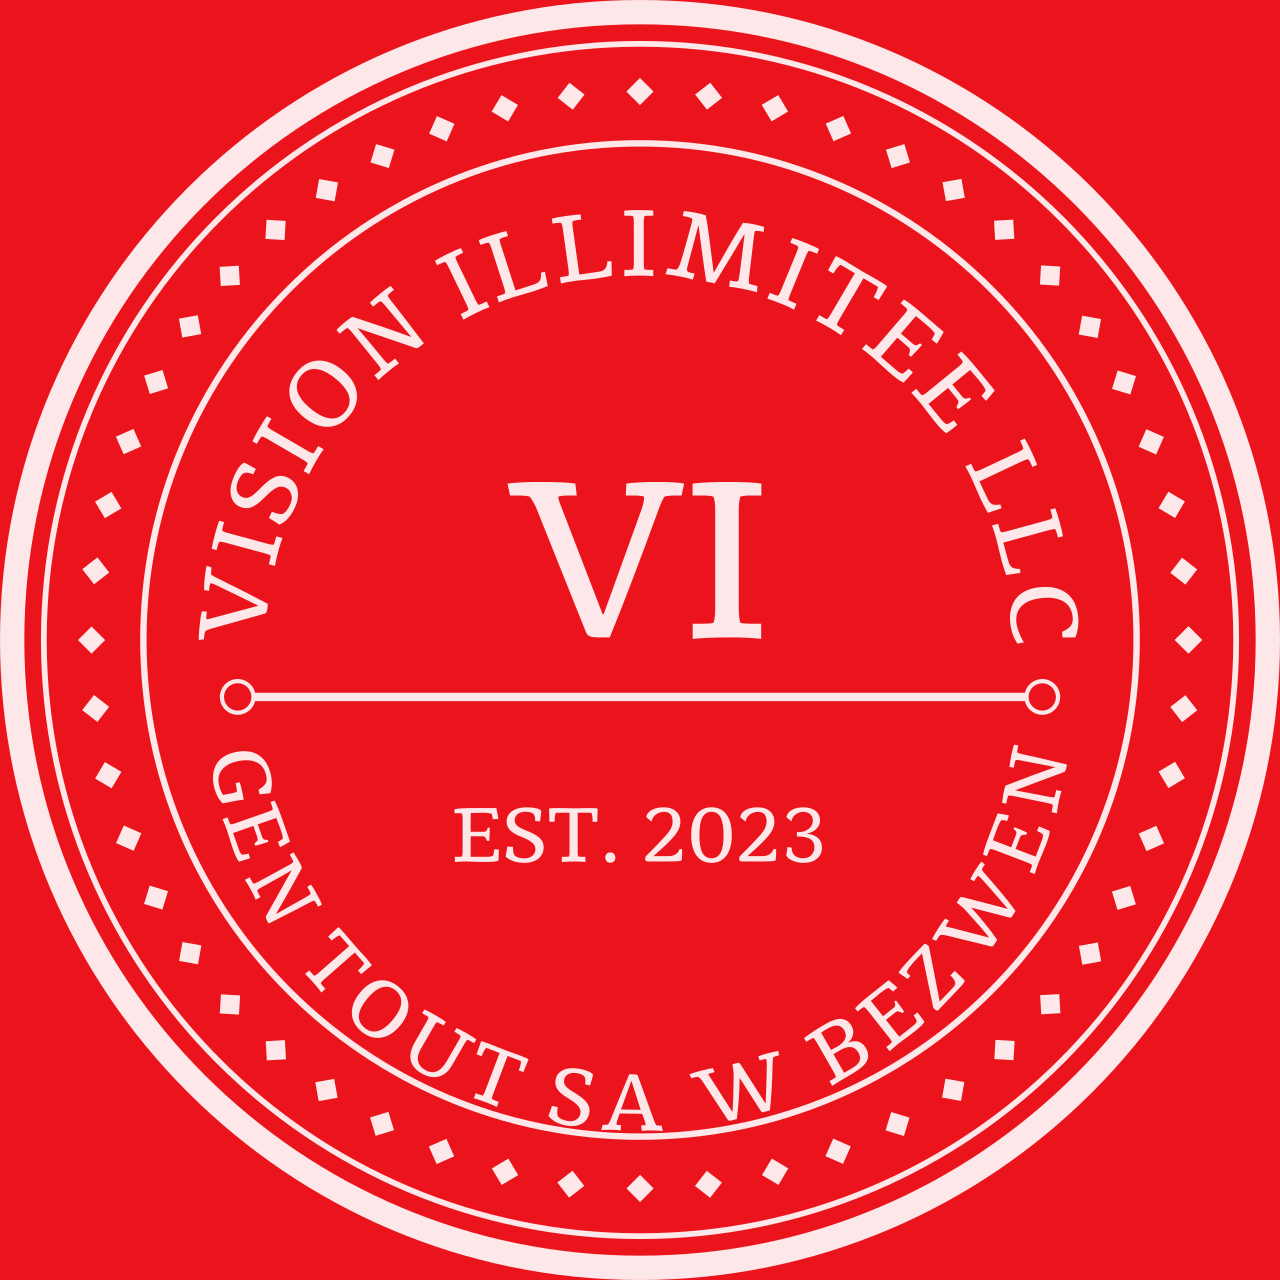 VISION ILLIMITEE LLC's logo